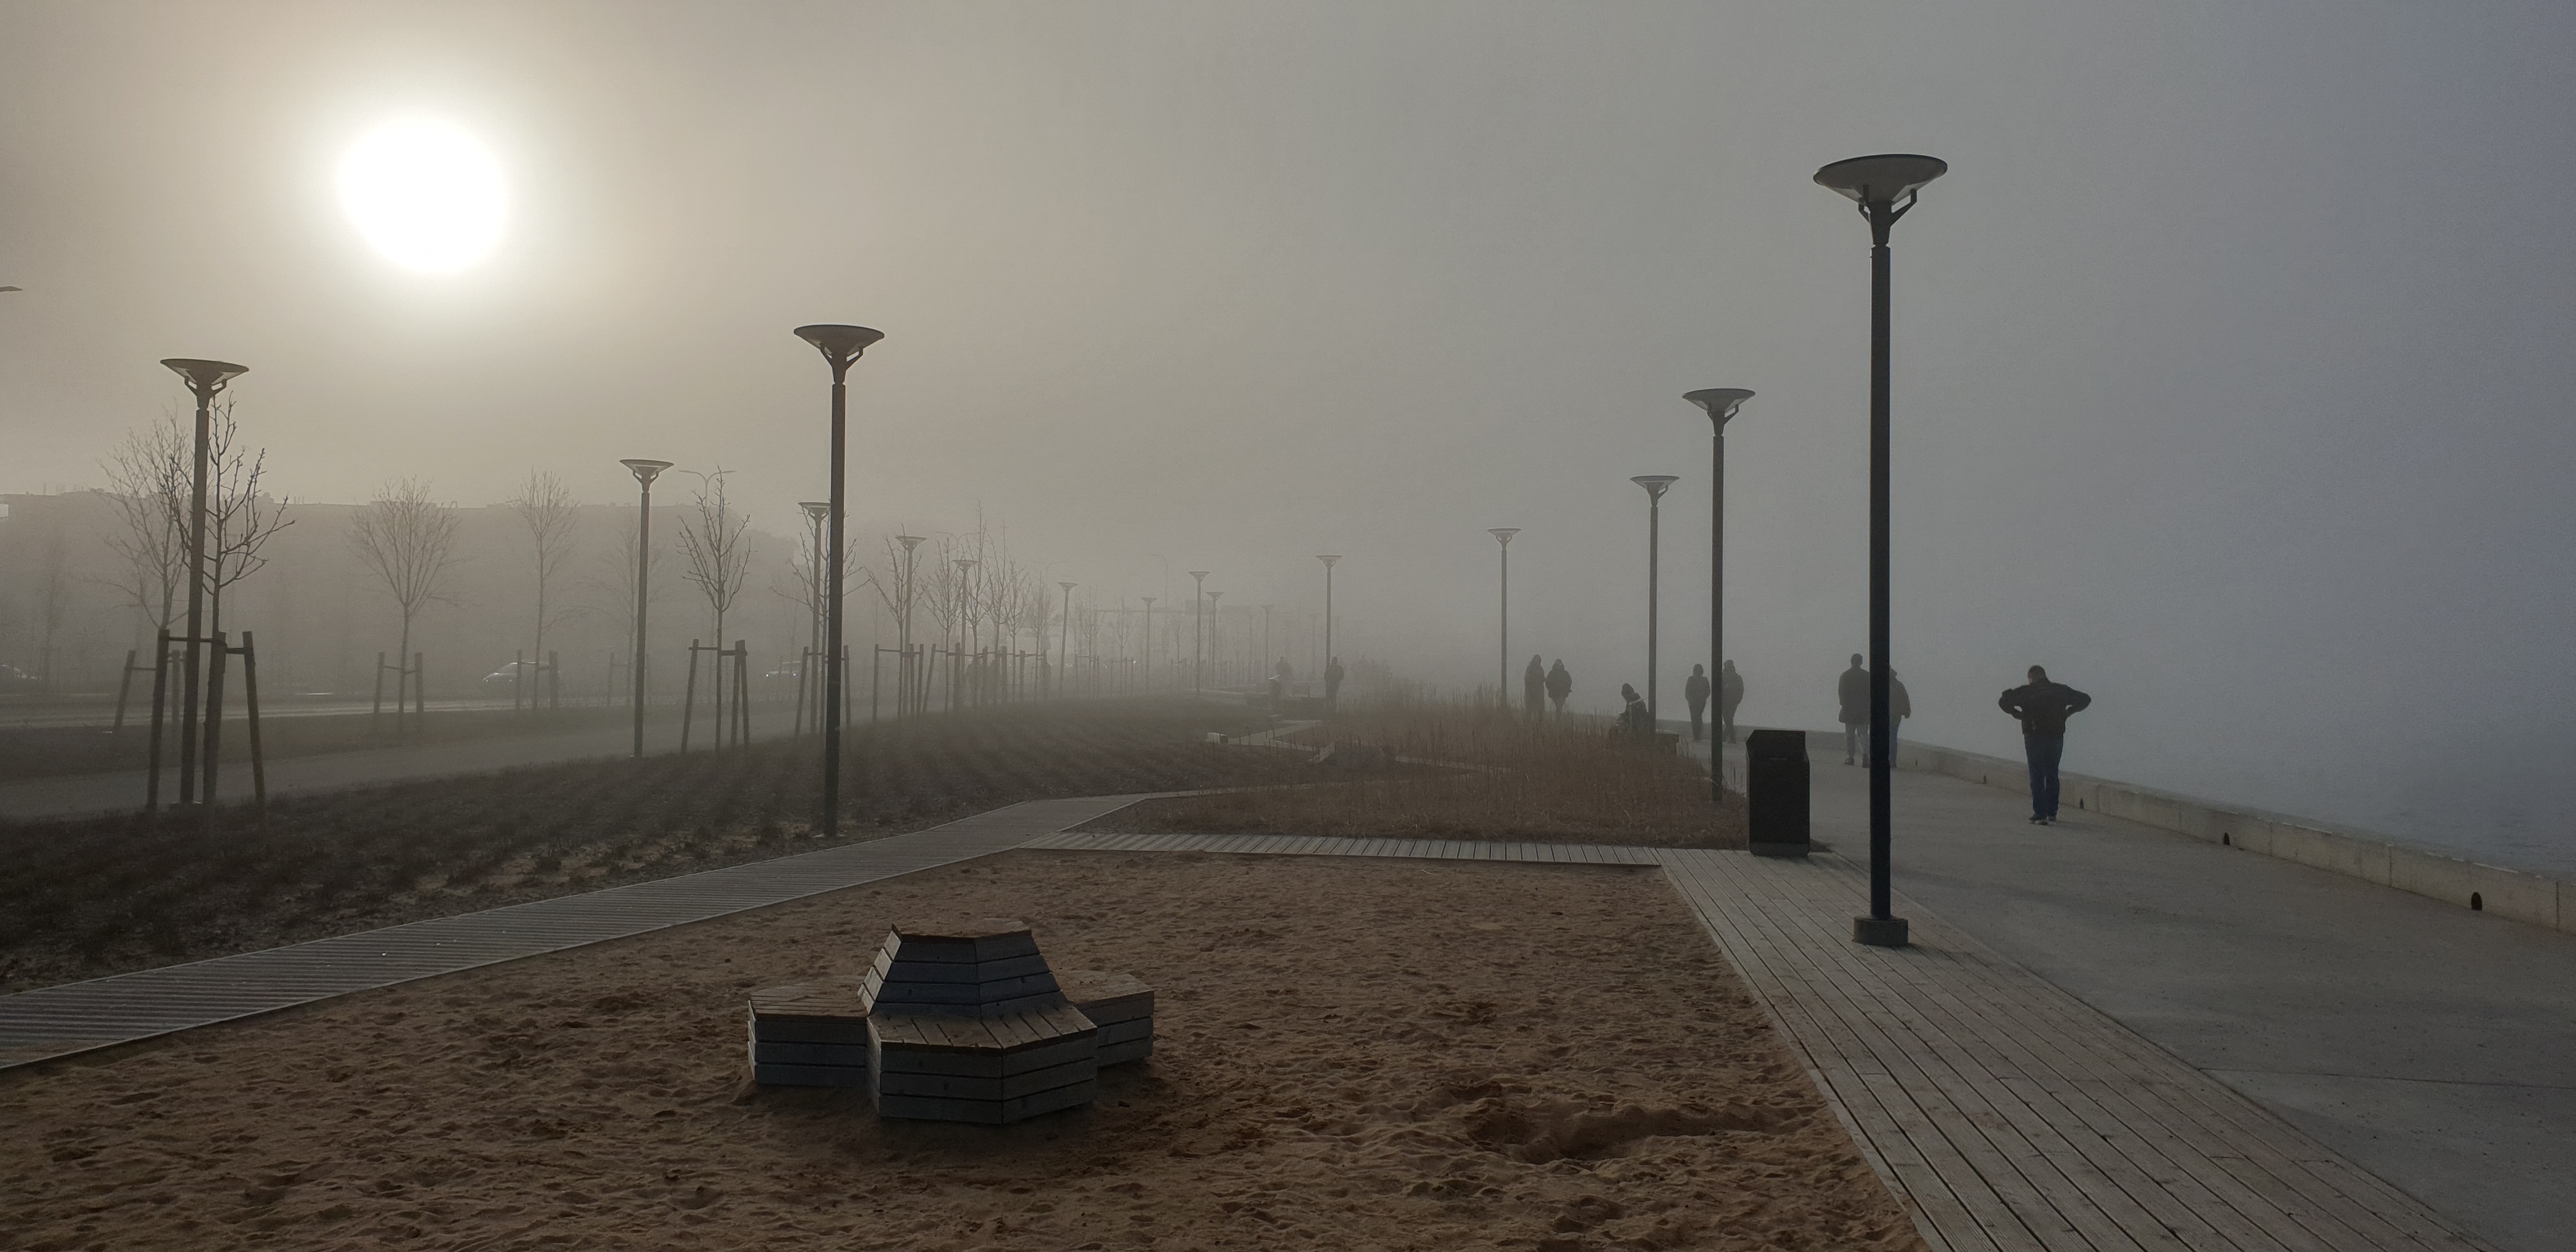 Promenade covered in fog